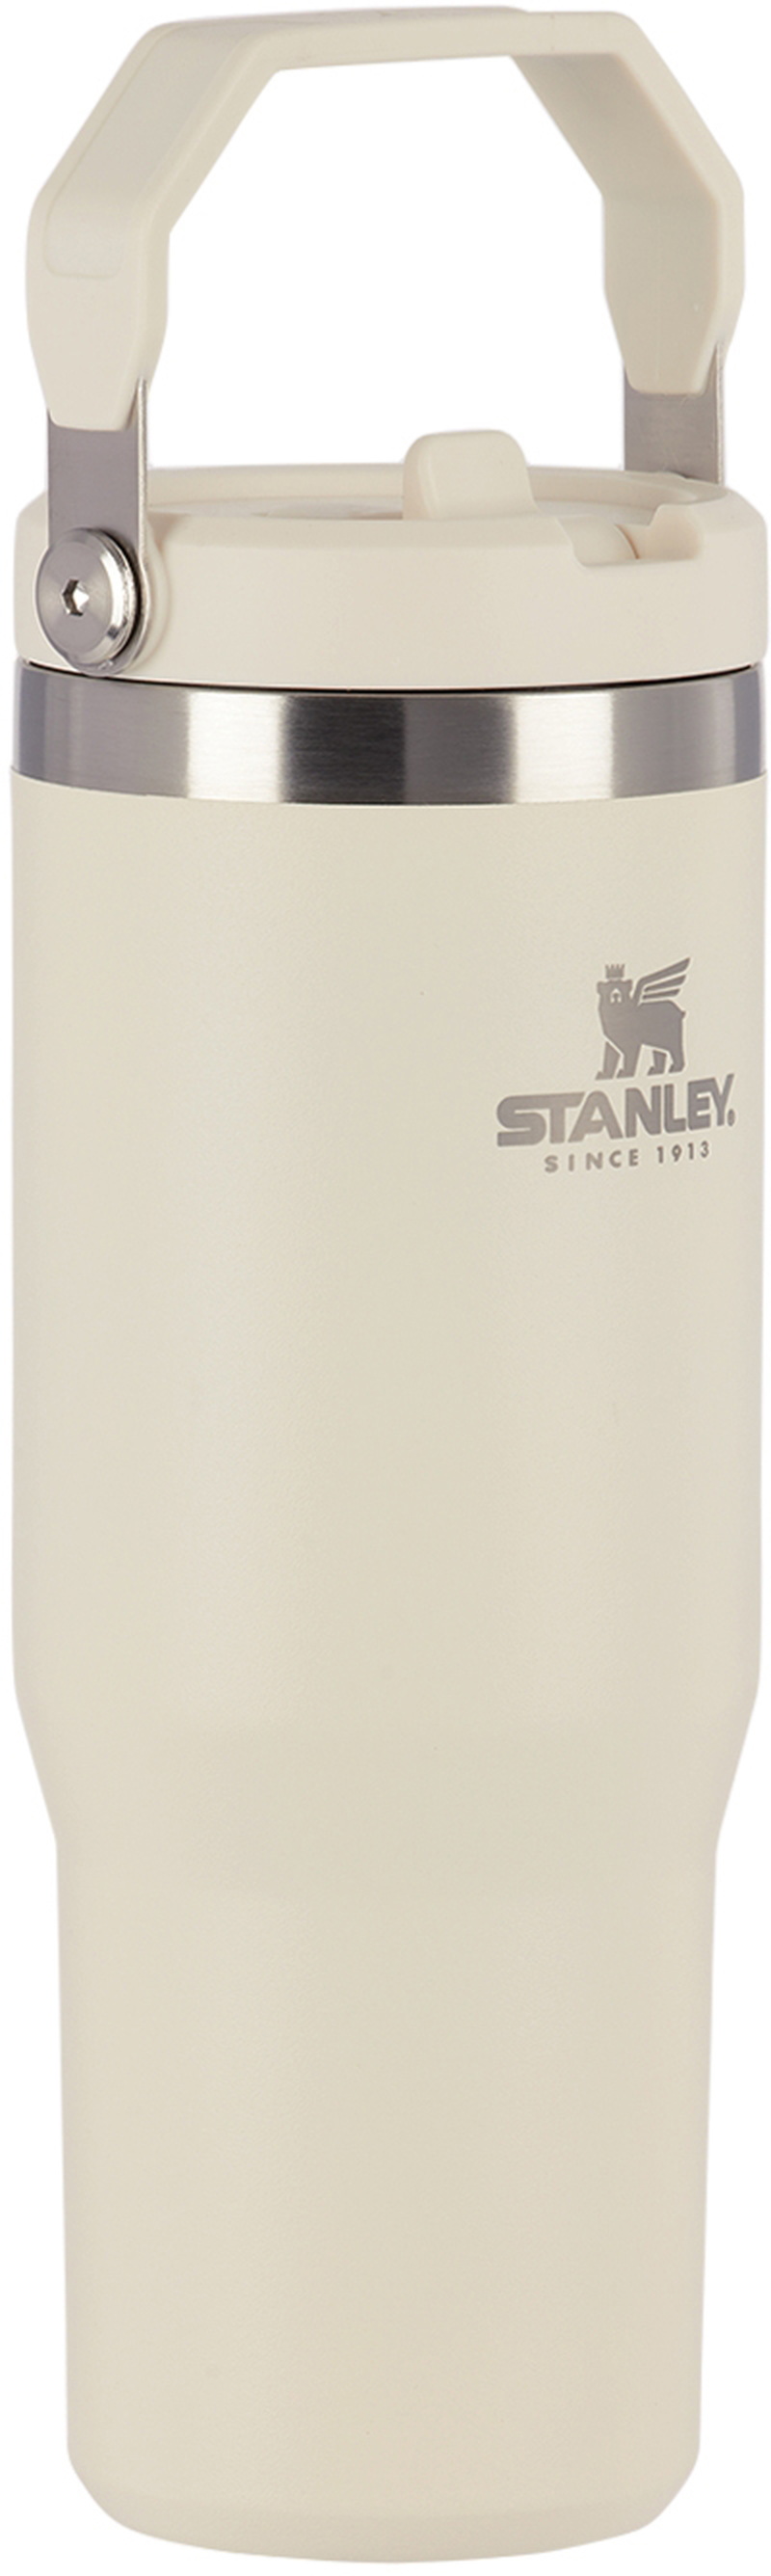 Stanley® Iceflow Flip Straw Tumbler 30 Oz